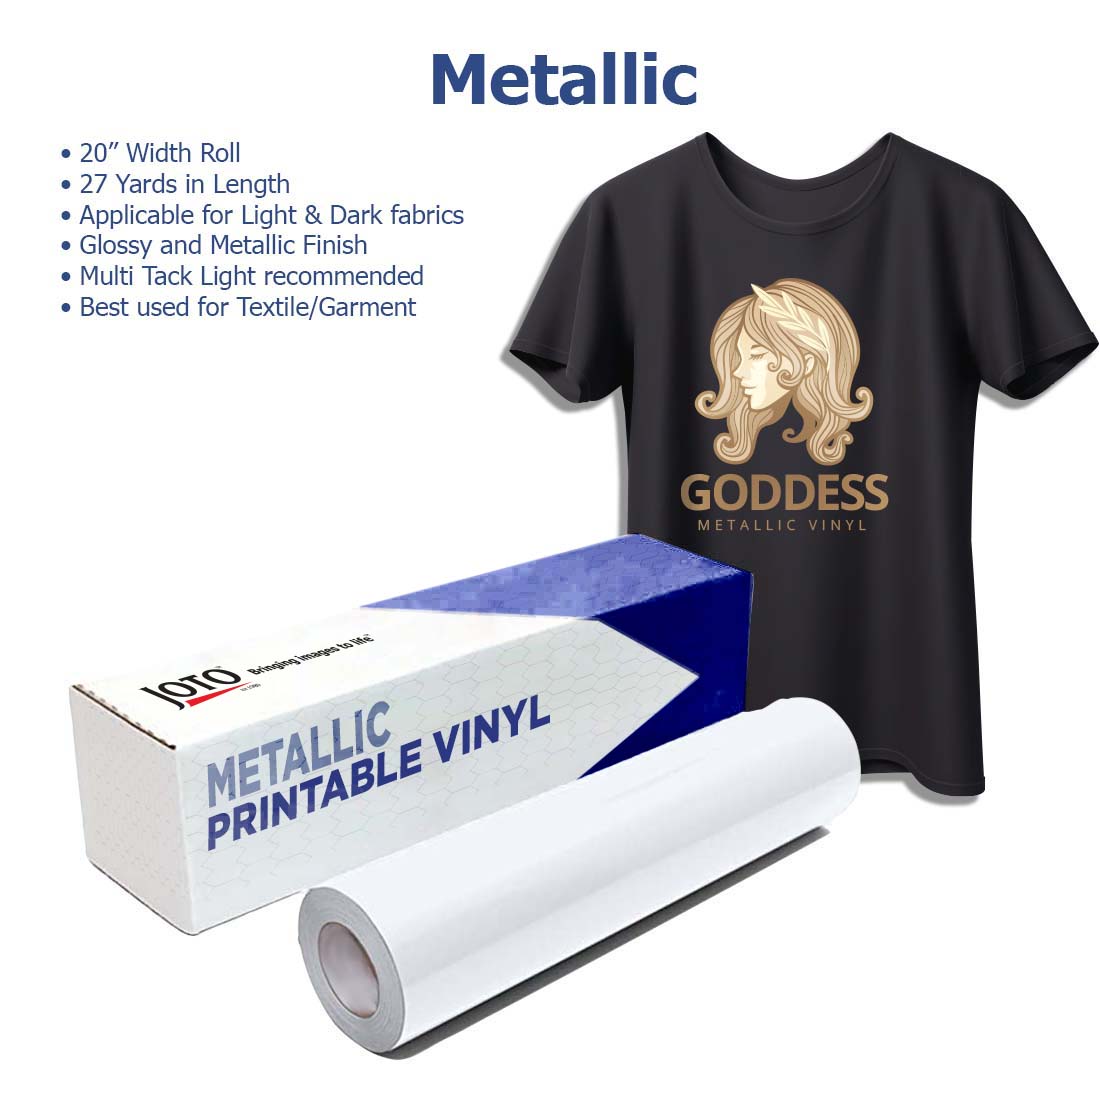 MultiPrint™ Metallic Printable Heat Transfer Vinyl - Joto Imaging Supplies Canada